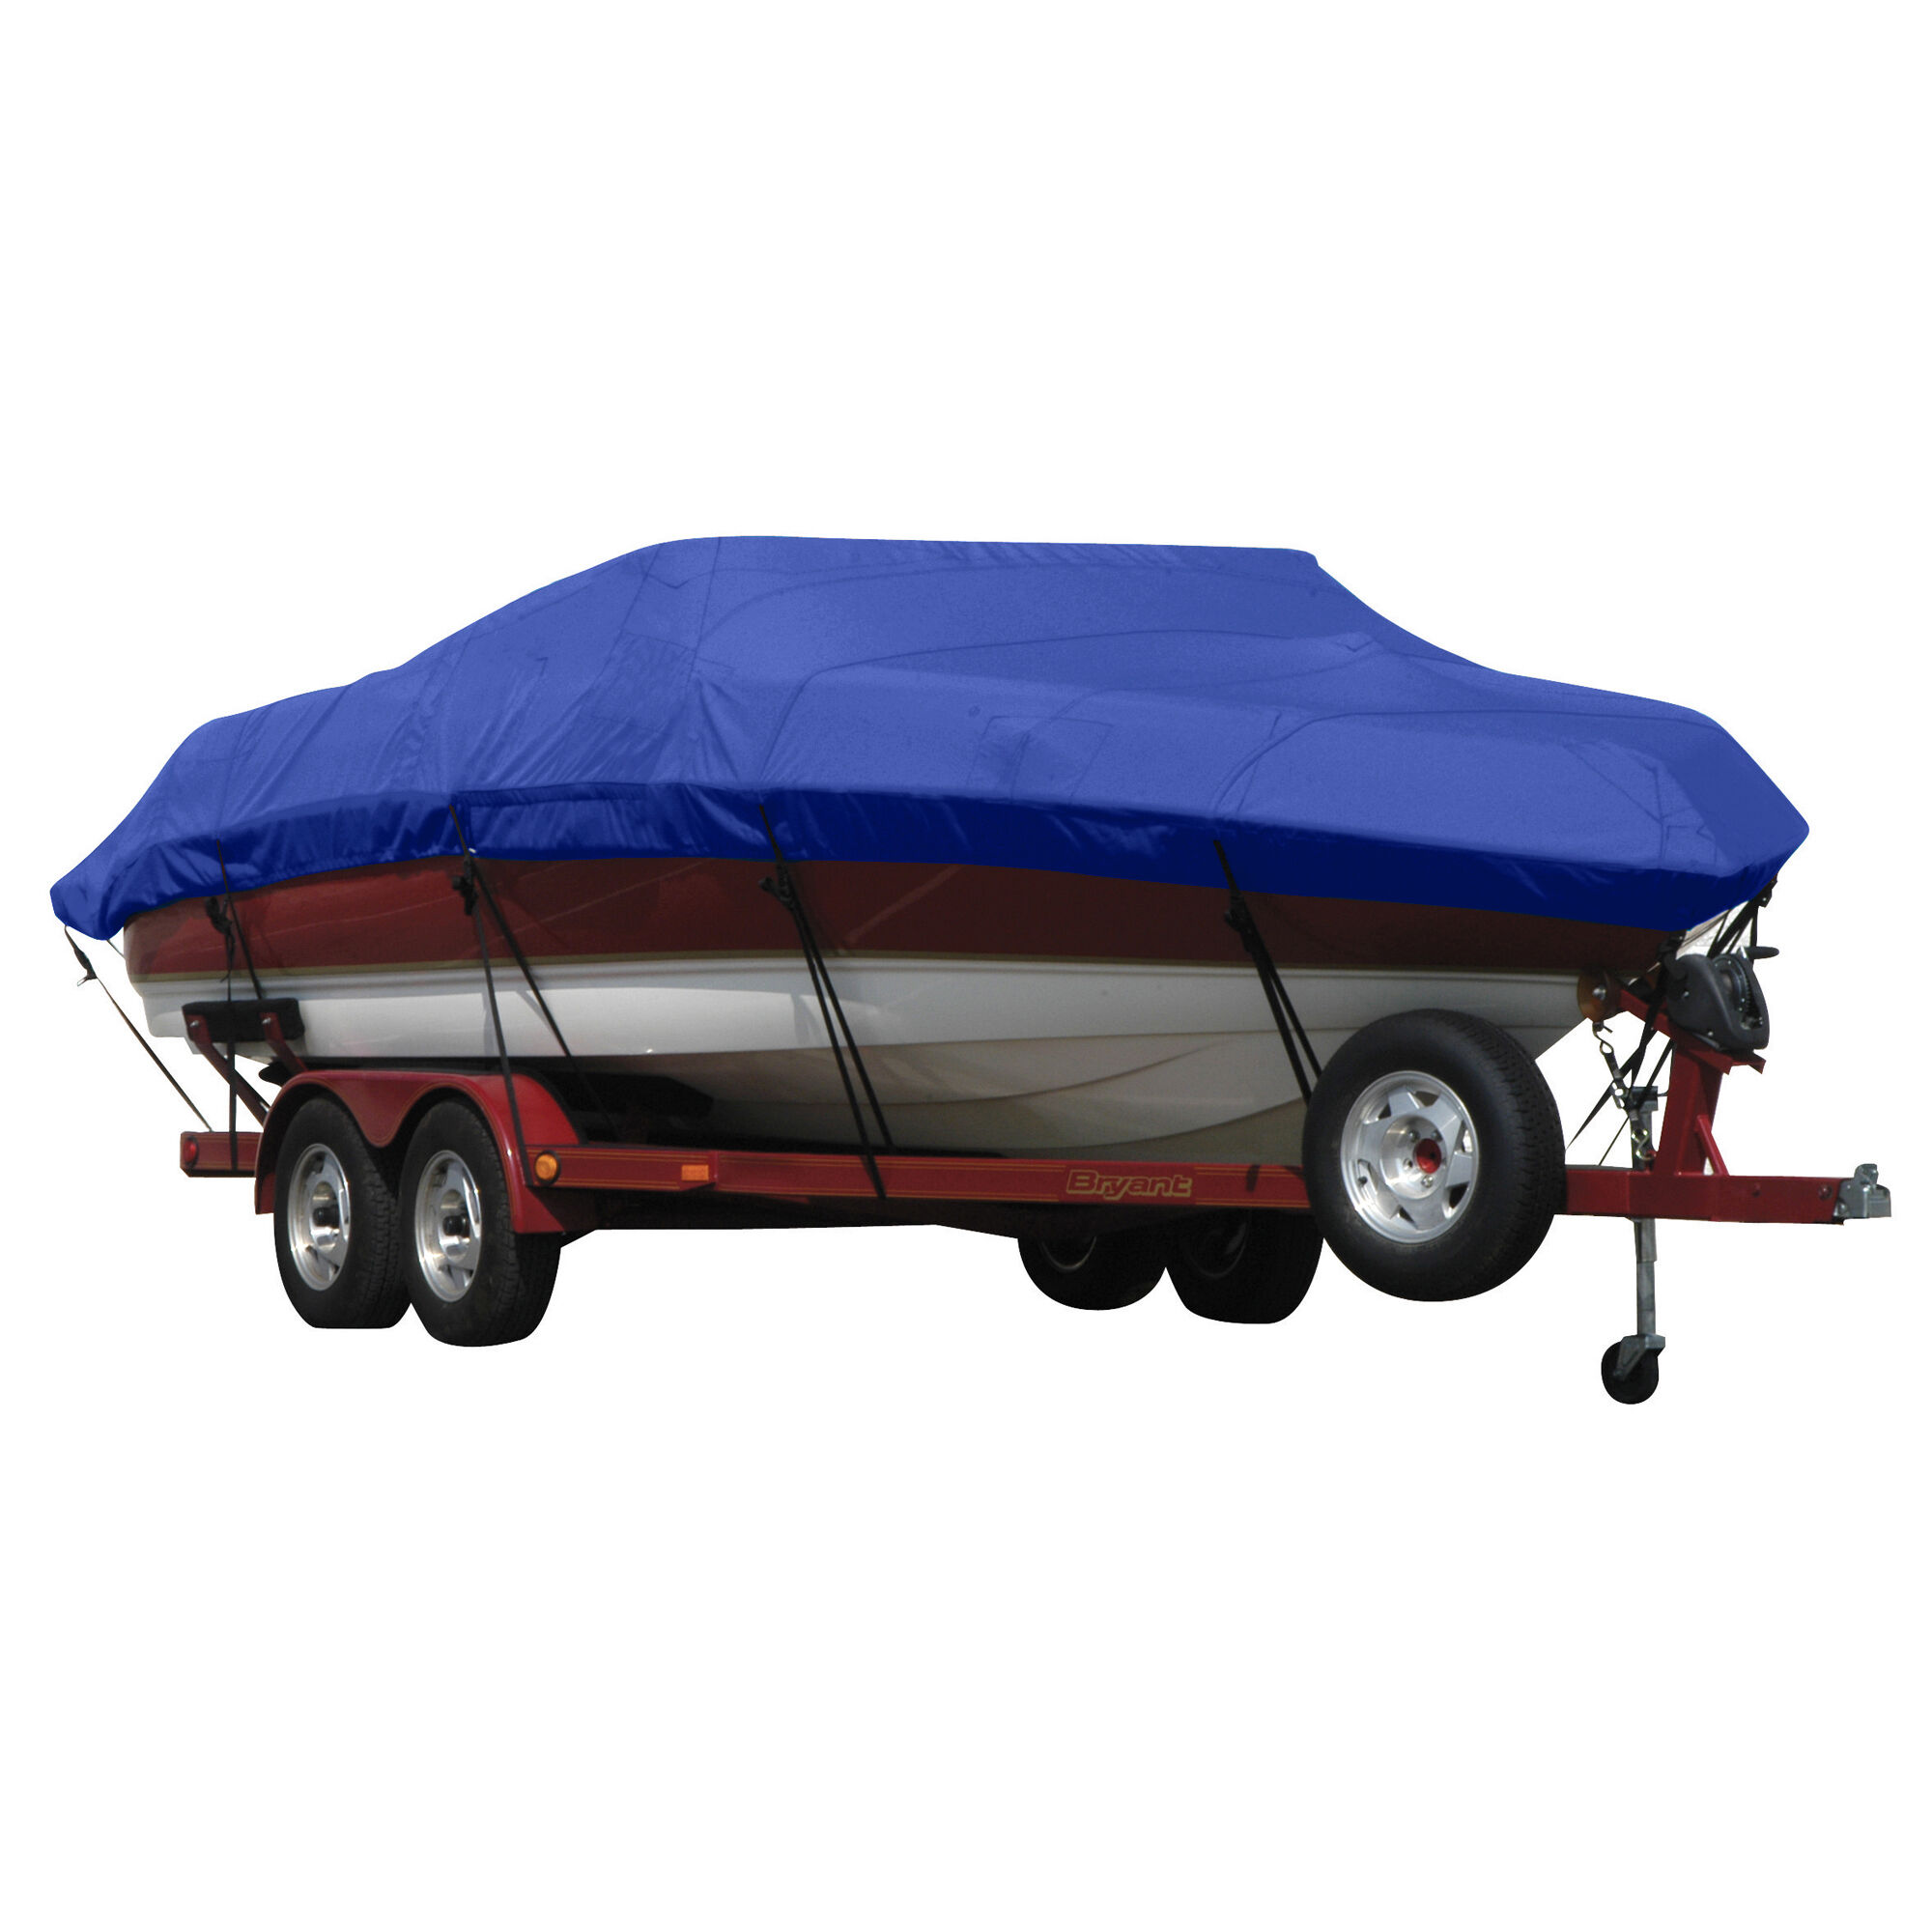 Covermate Exact Fit Sunbrella Boat Cover for Procraft Combo 200 Combo 200 w/ Port Minnkota Trolling Motor O/B. Ocean Blue